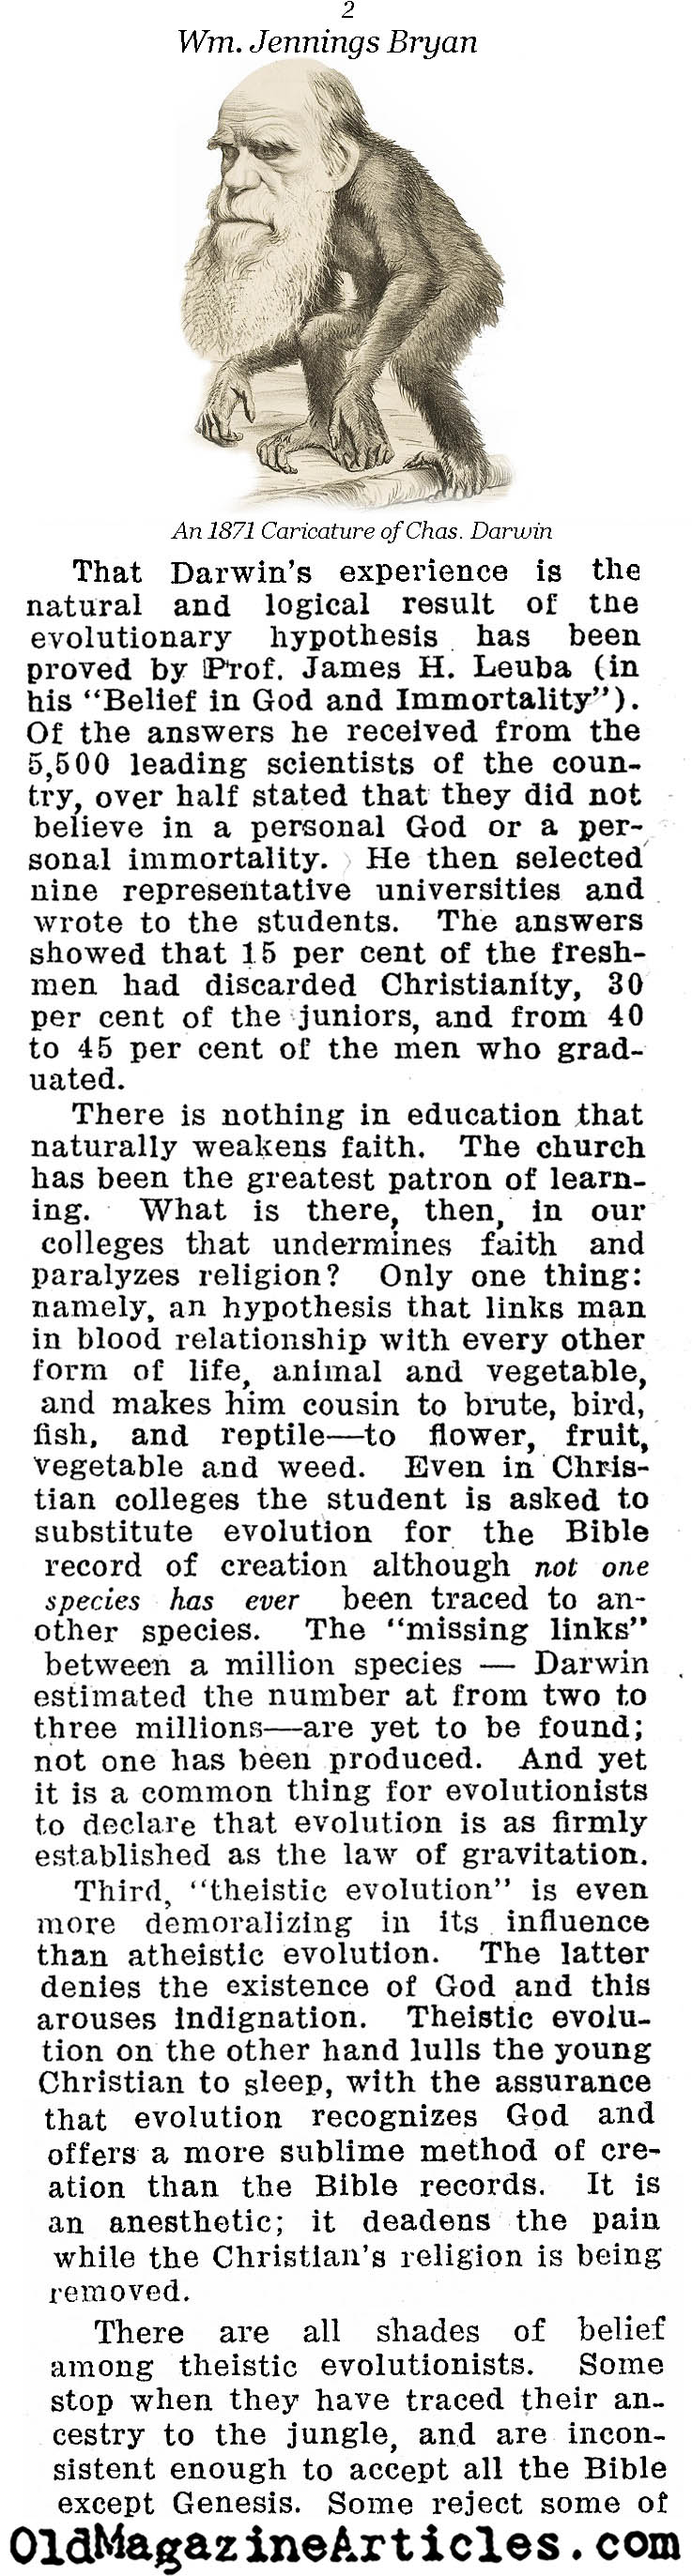 William Jennings Bryan on Evolution (Reader's Digest, 1923)